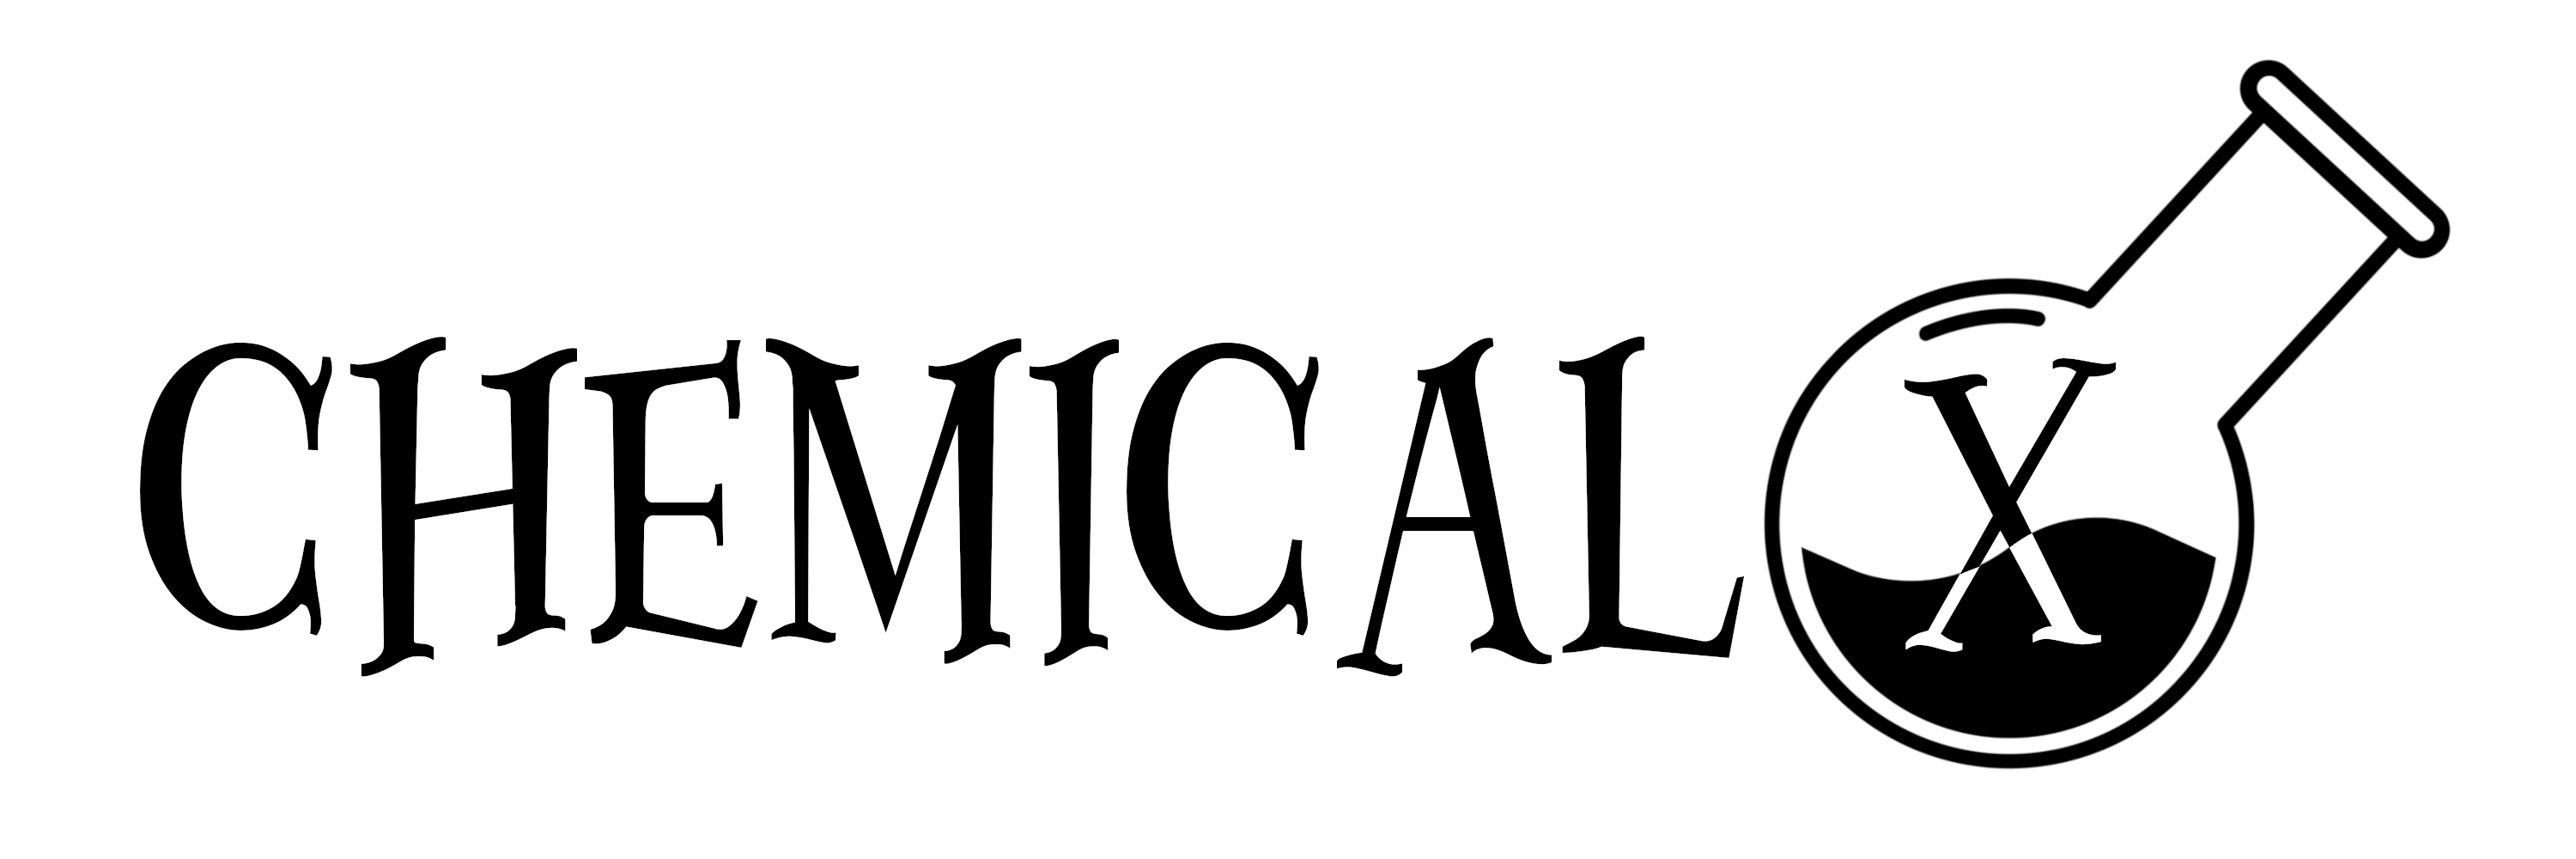 chemicalx_logo.jpg